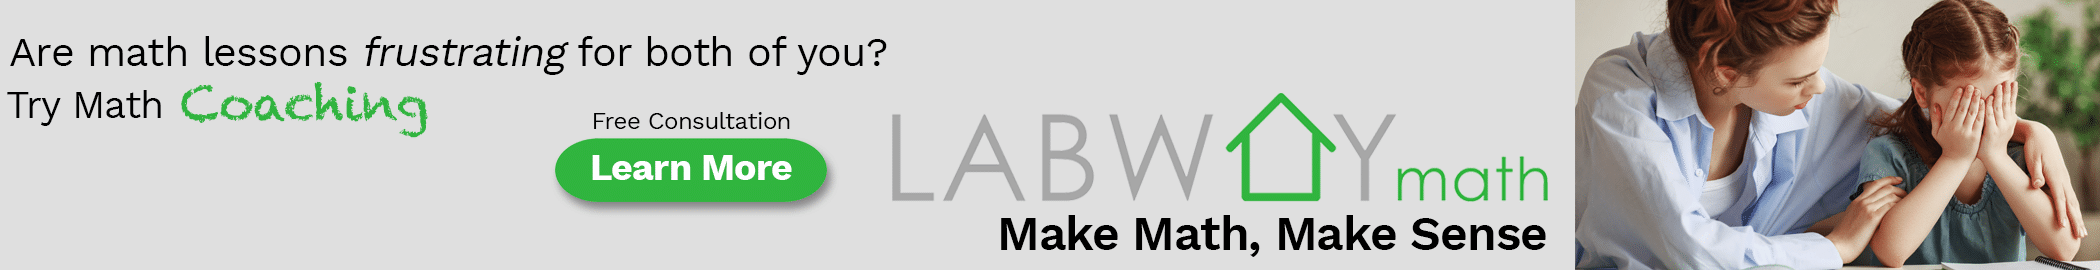 LabWay MAth Banner